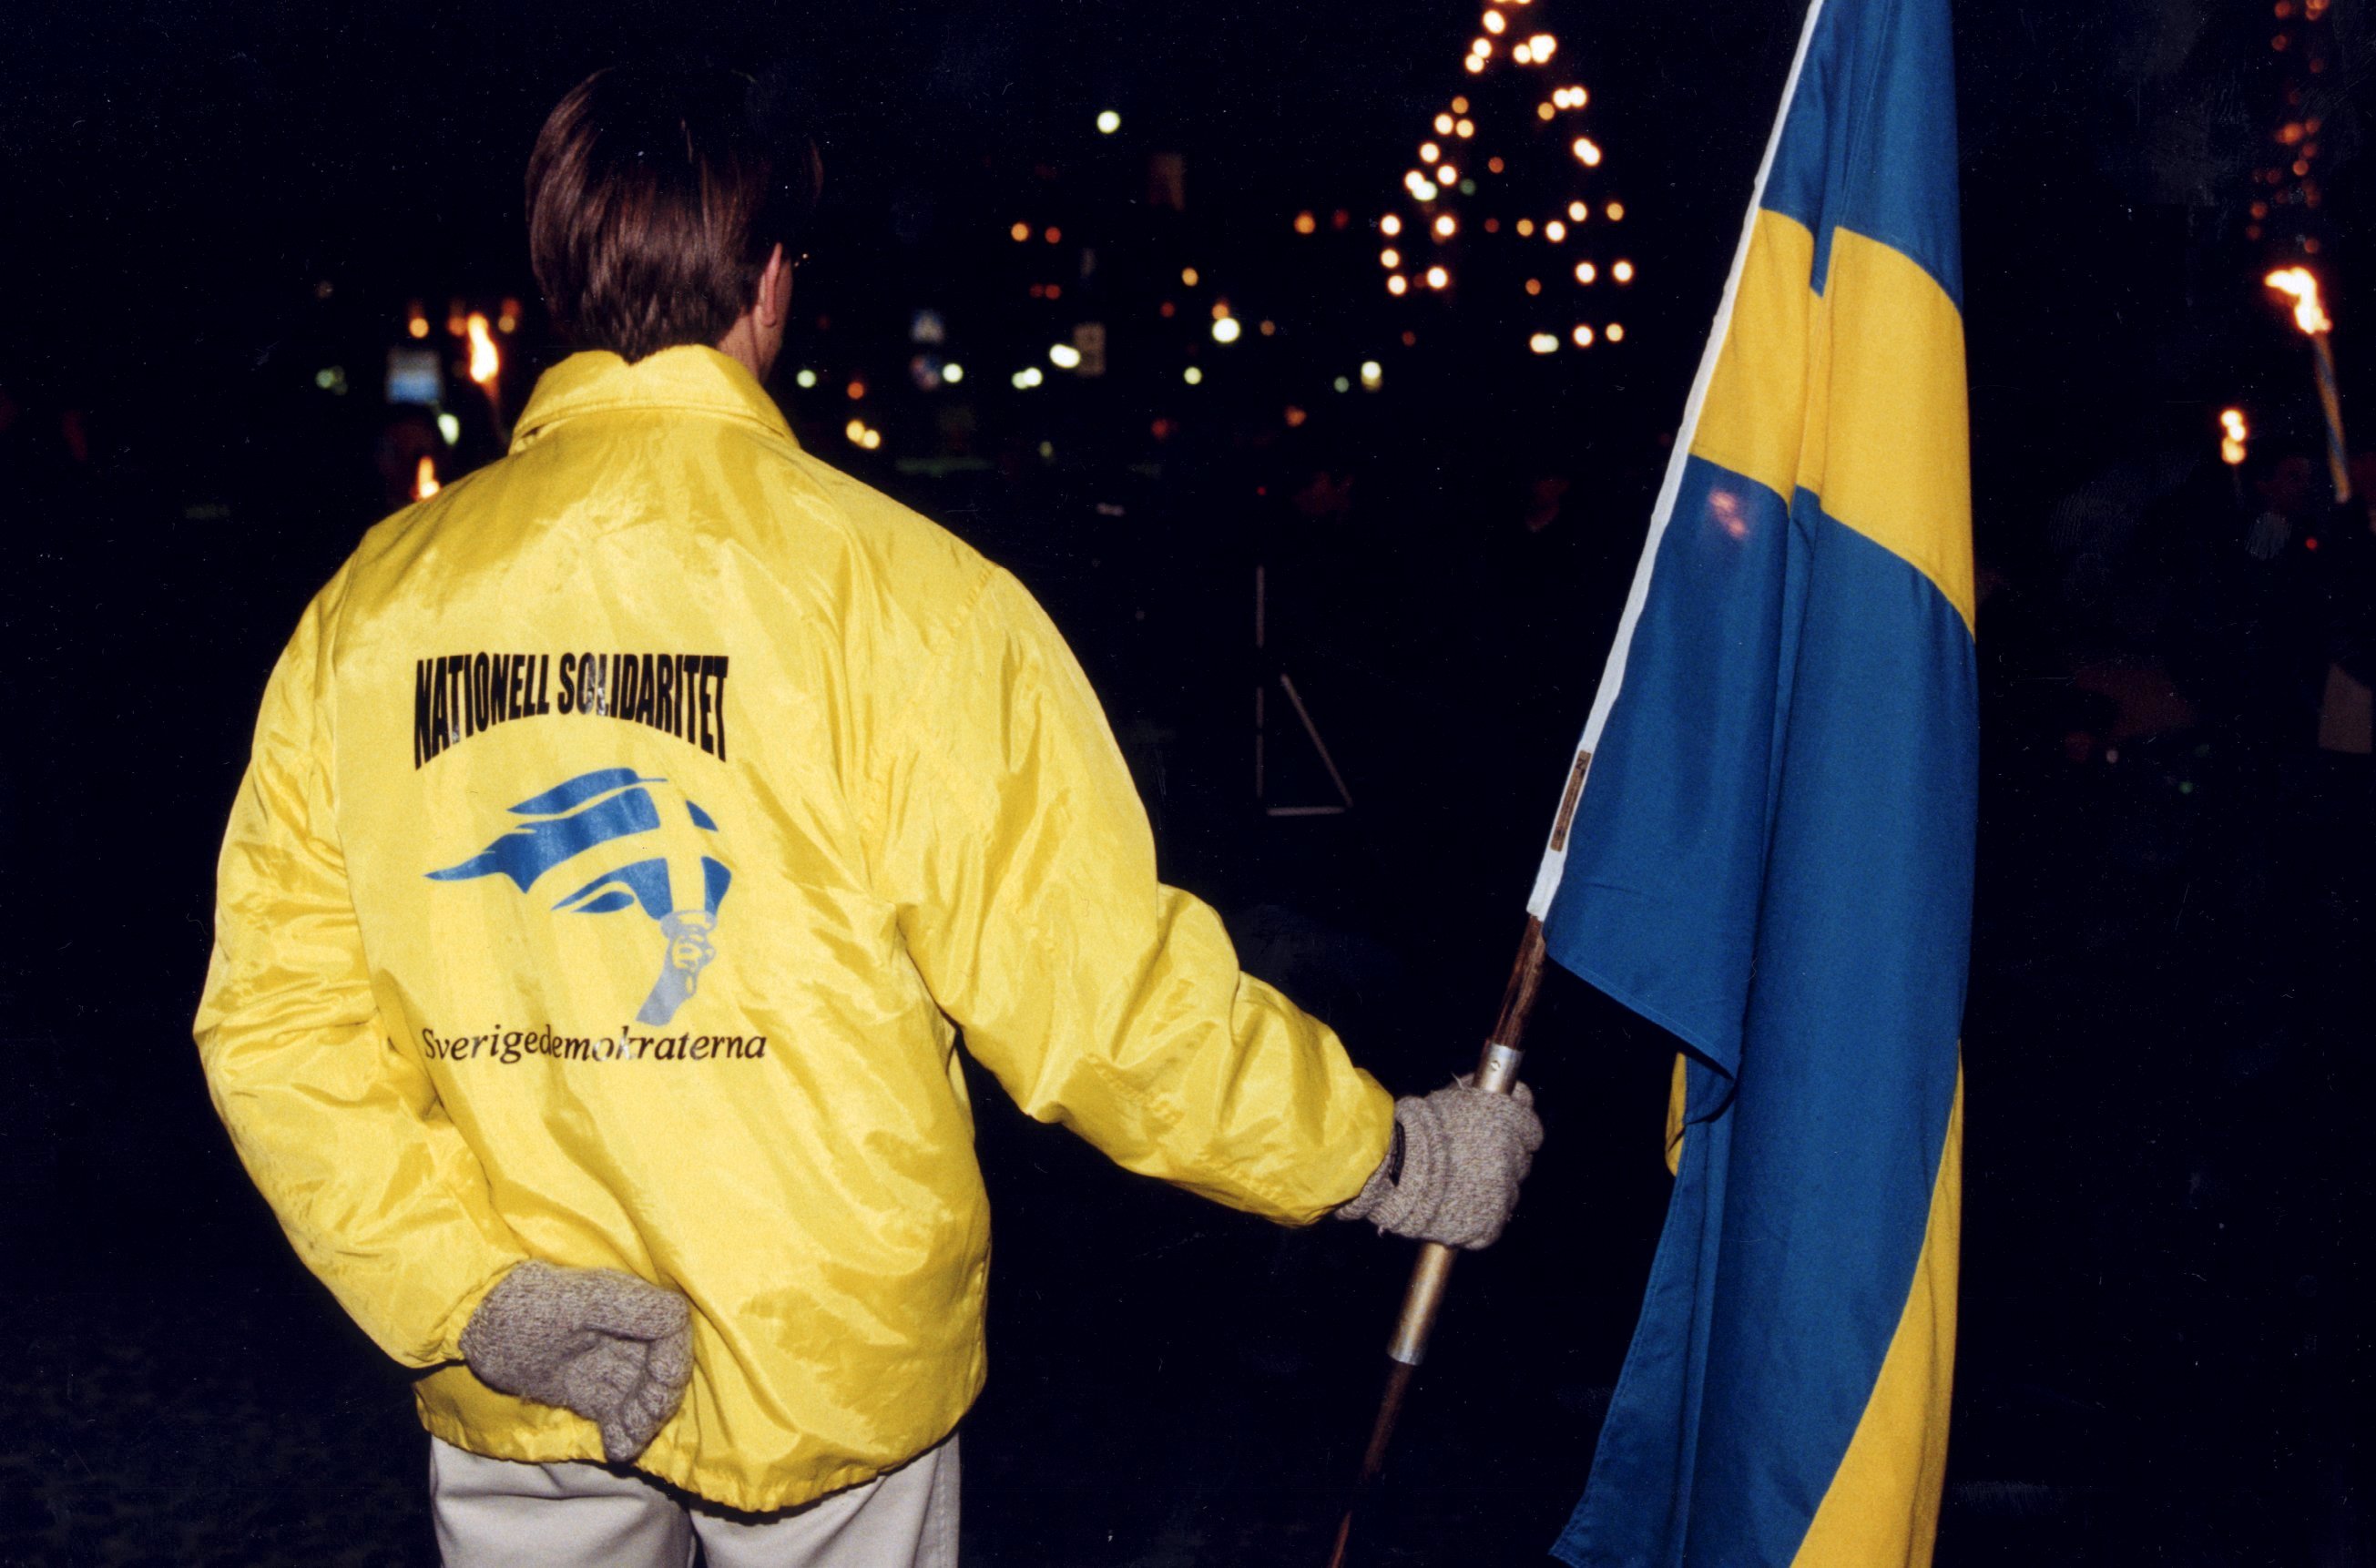 Riksdagsvalet 2010, Sverigedemokraterna, gatuvåld, Stureplan